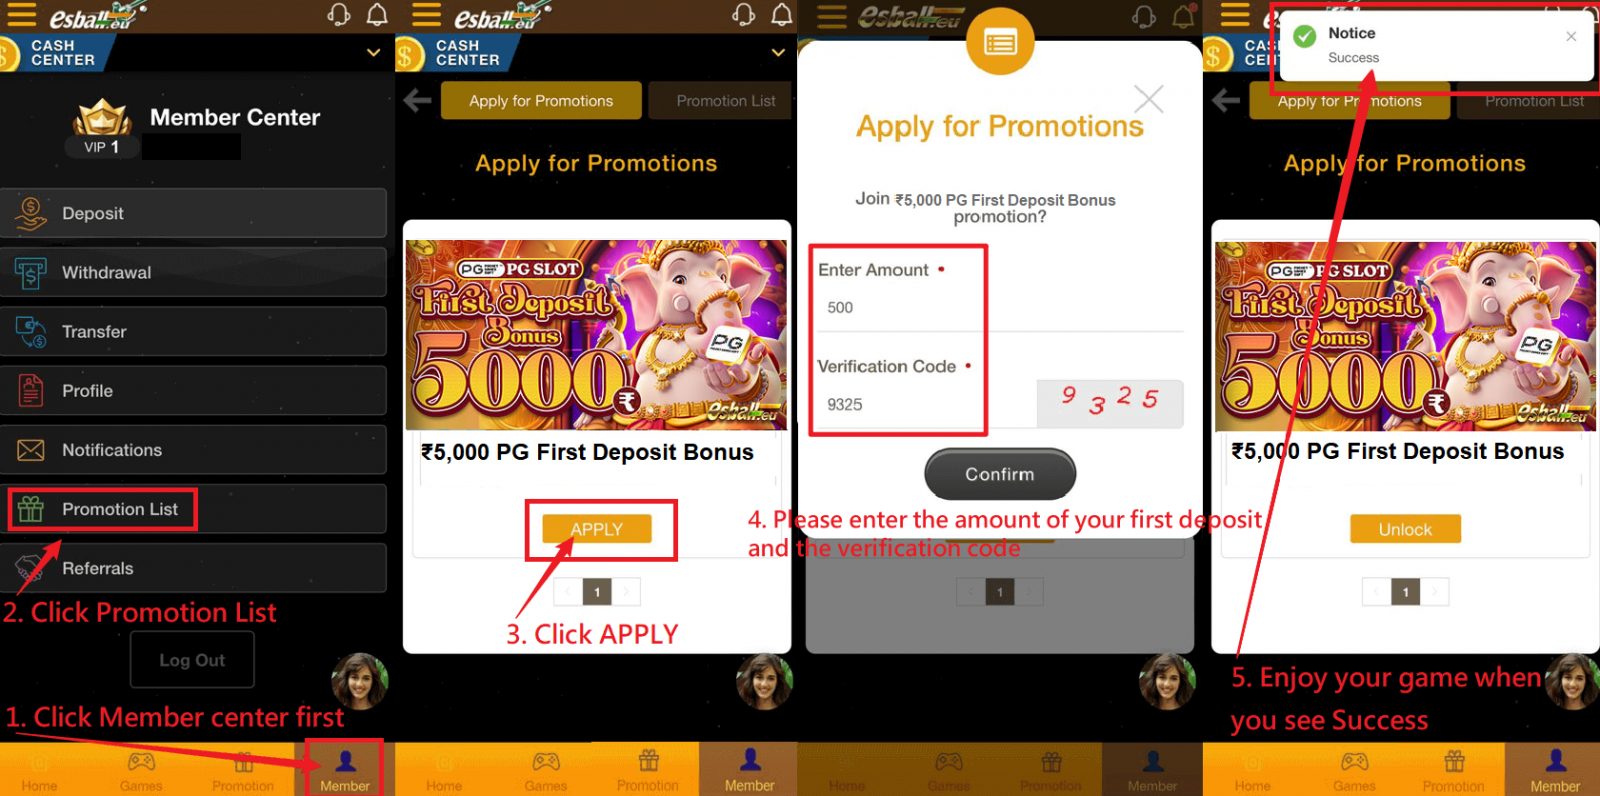 ₹5000 Slot Deposit Bonus, PG Soft First Deposit Bonus Casino